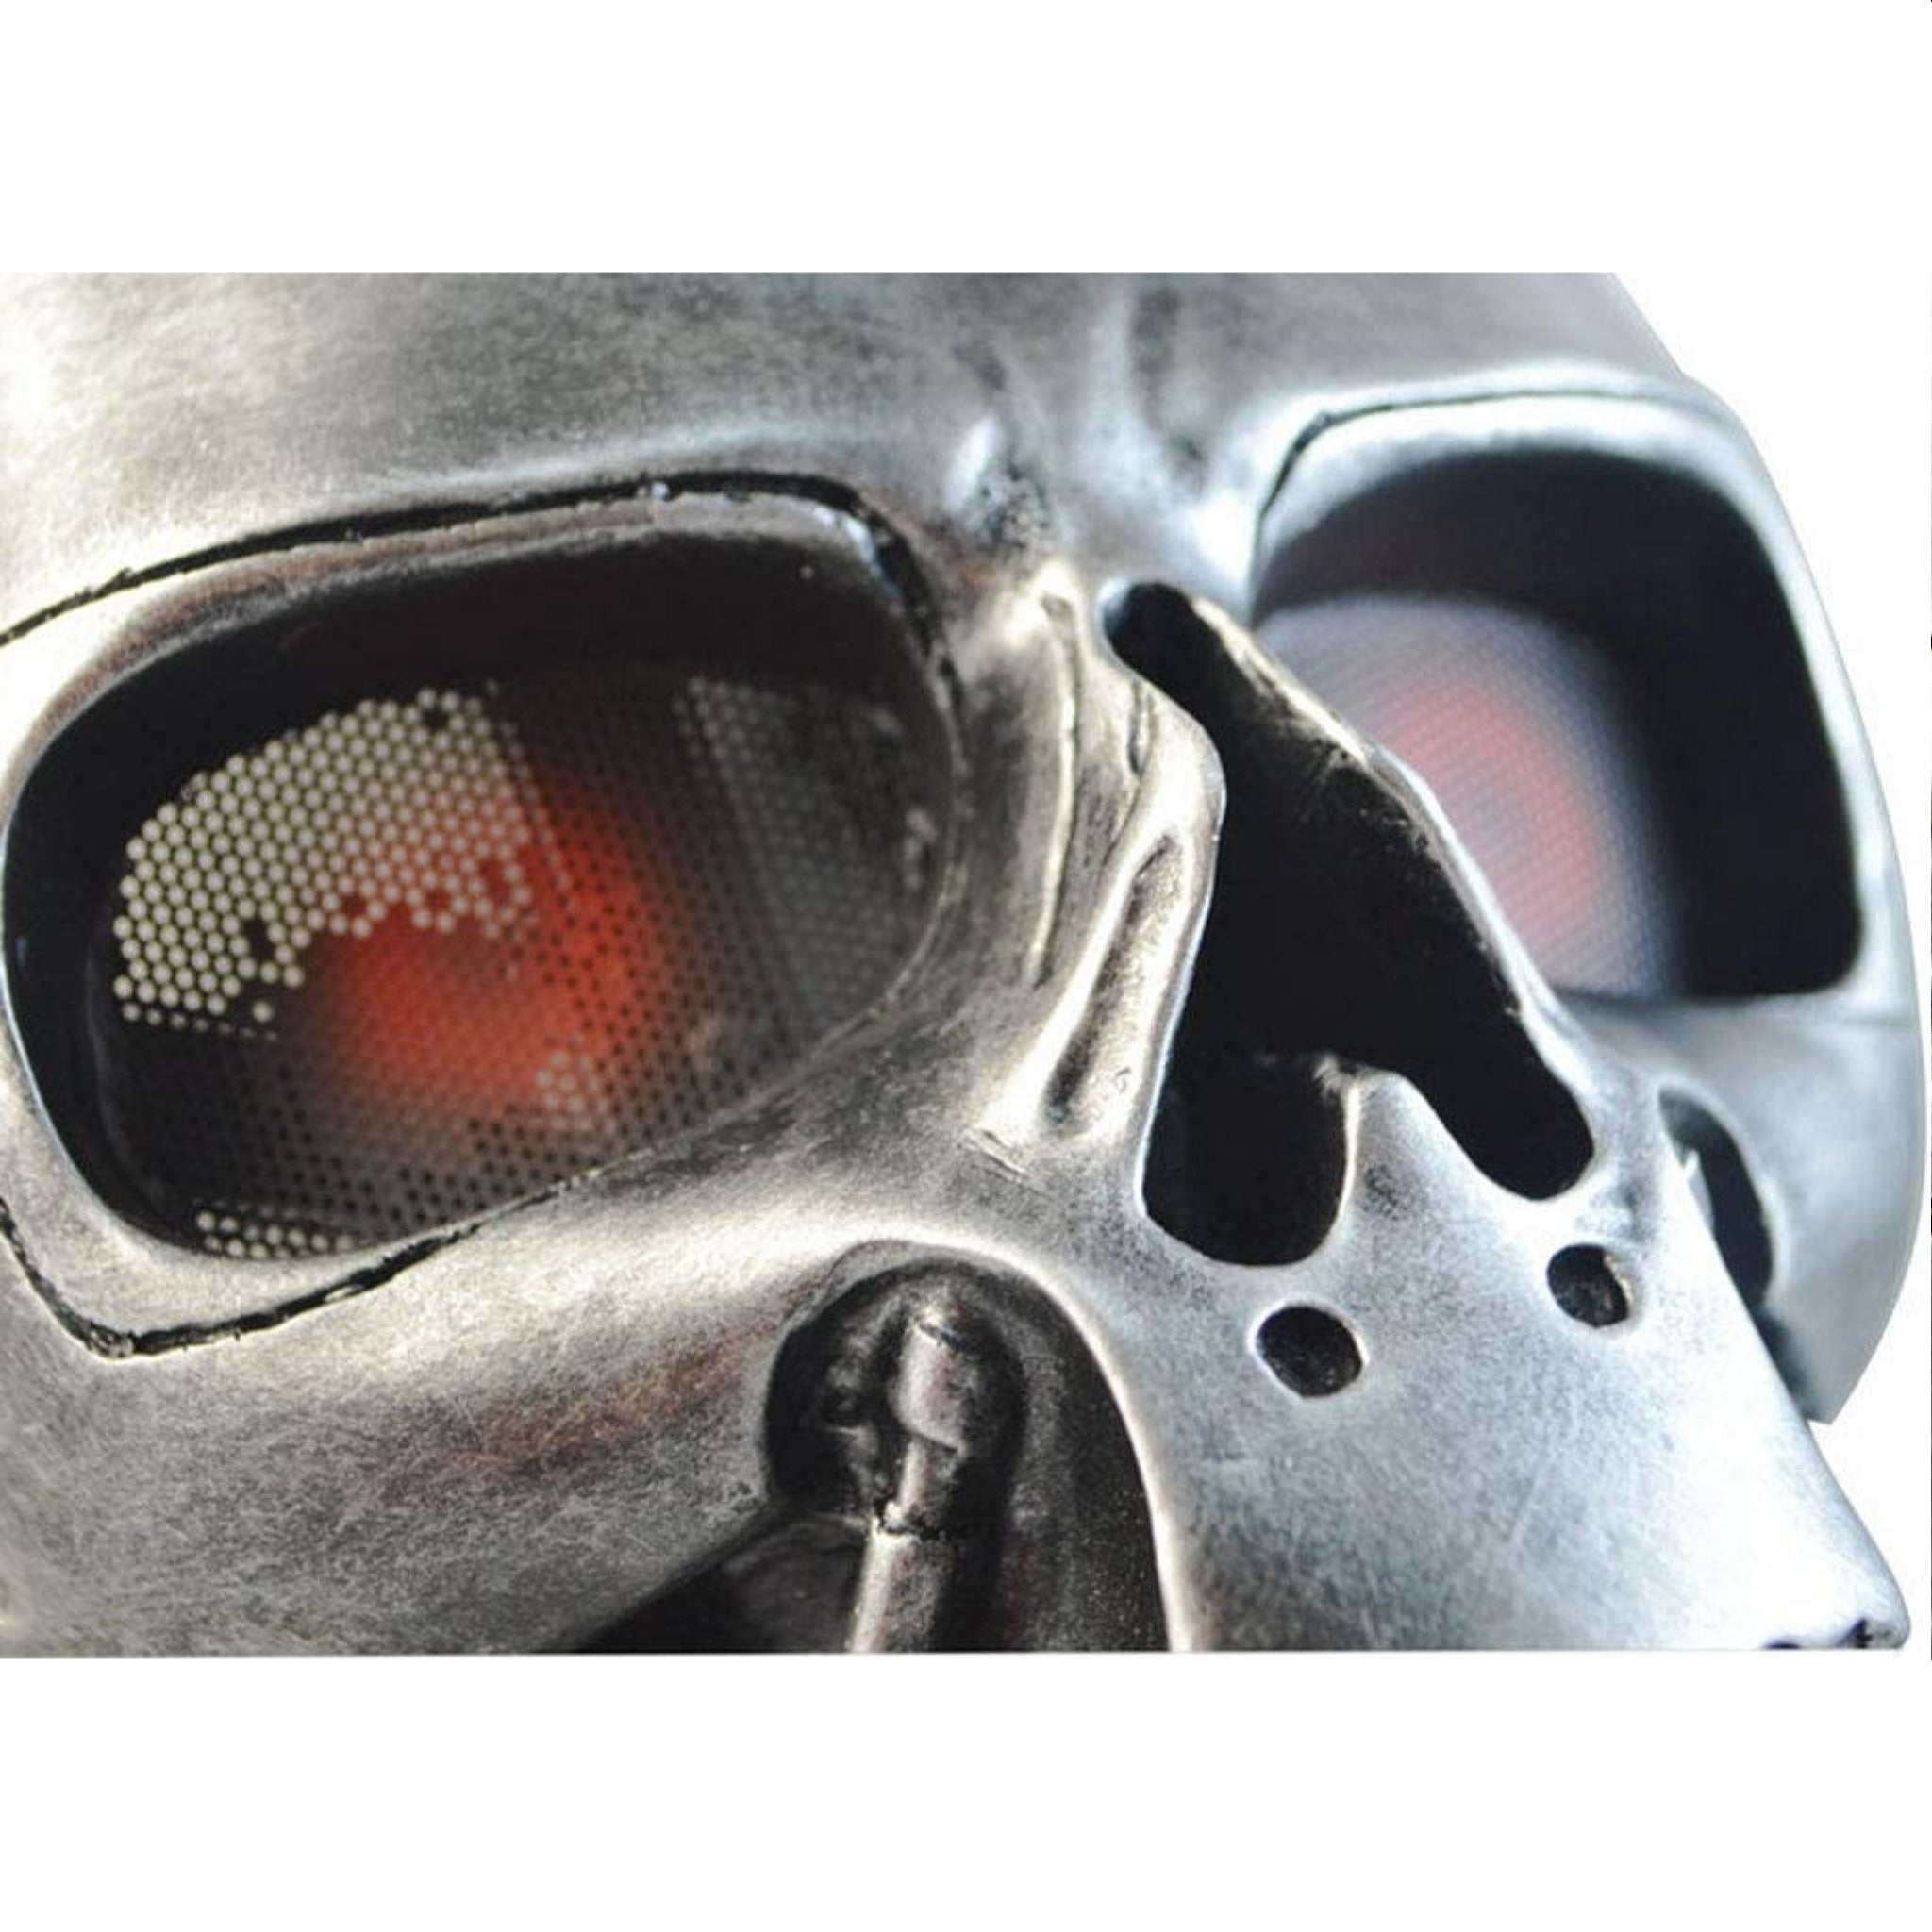 Terminator Arnold Schwarzenegger PVC Mask Full Face Cosplay Replica